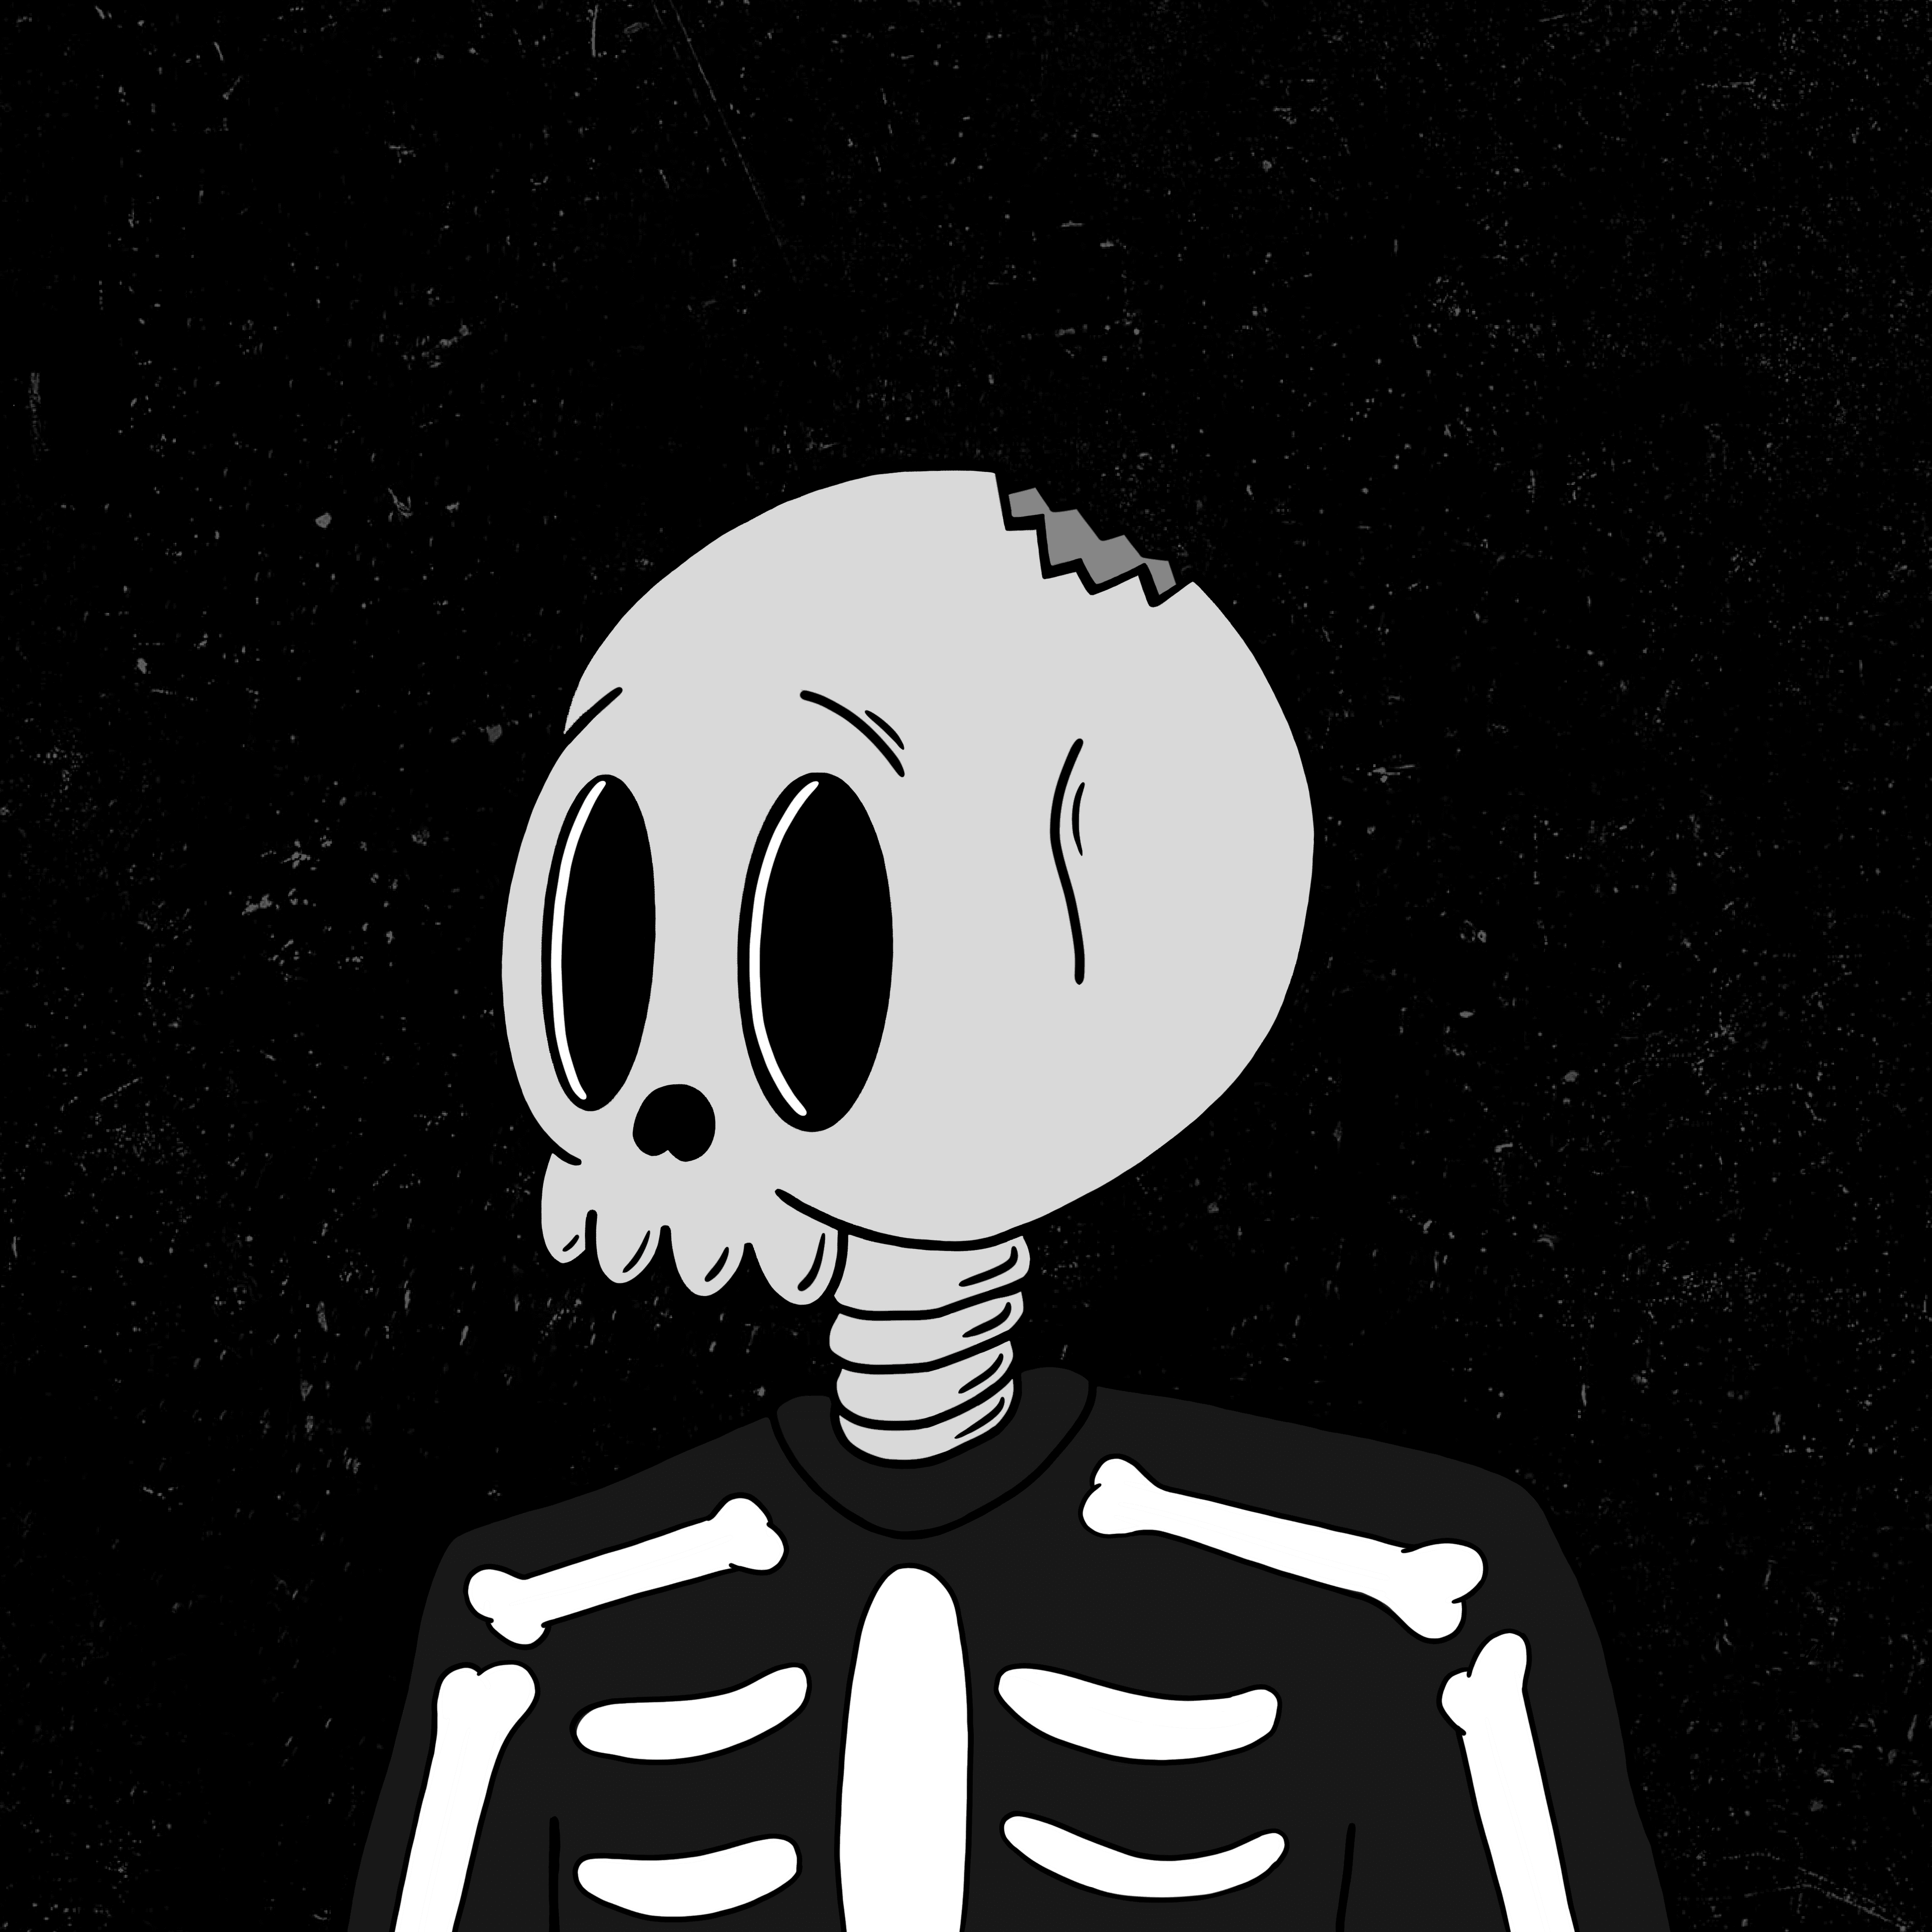 Skeleton 188: BONEZ 